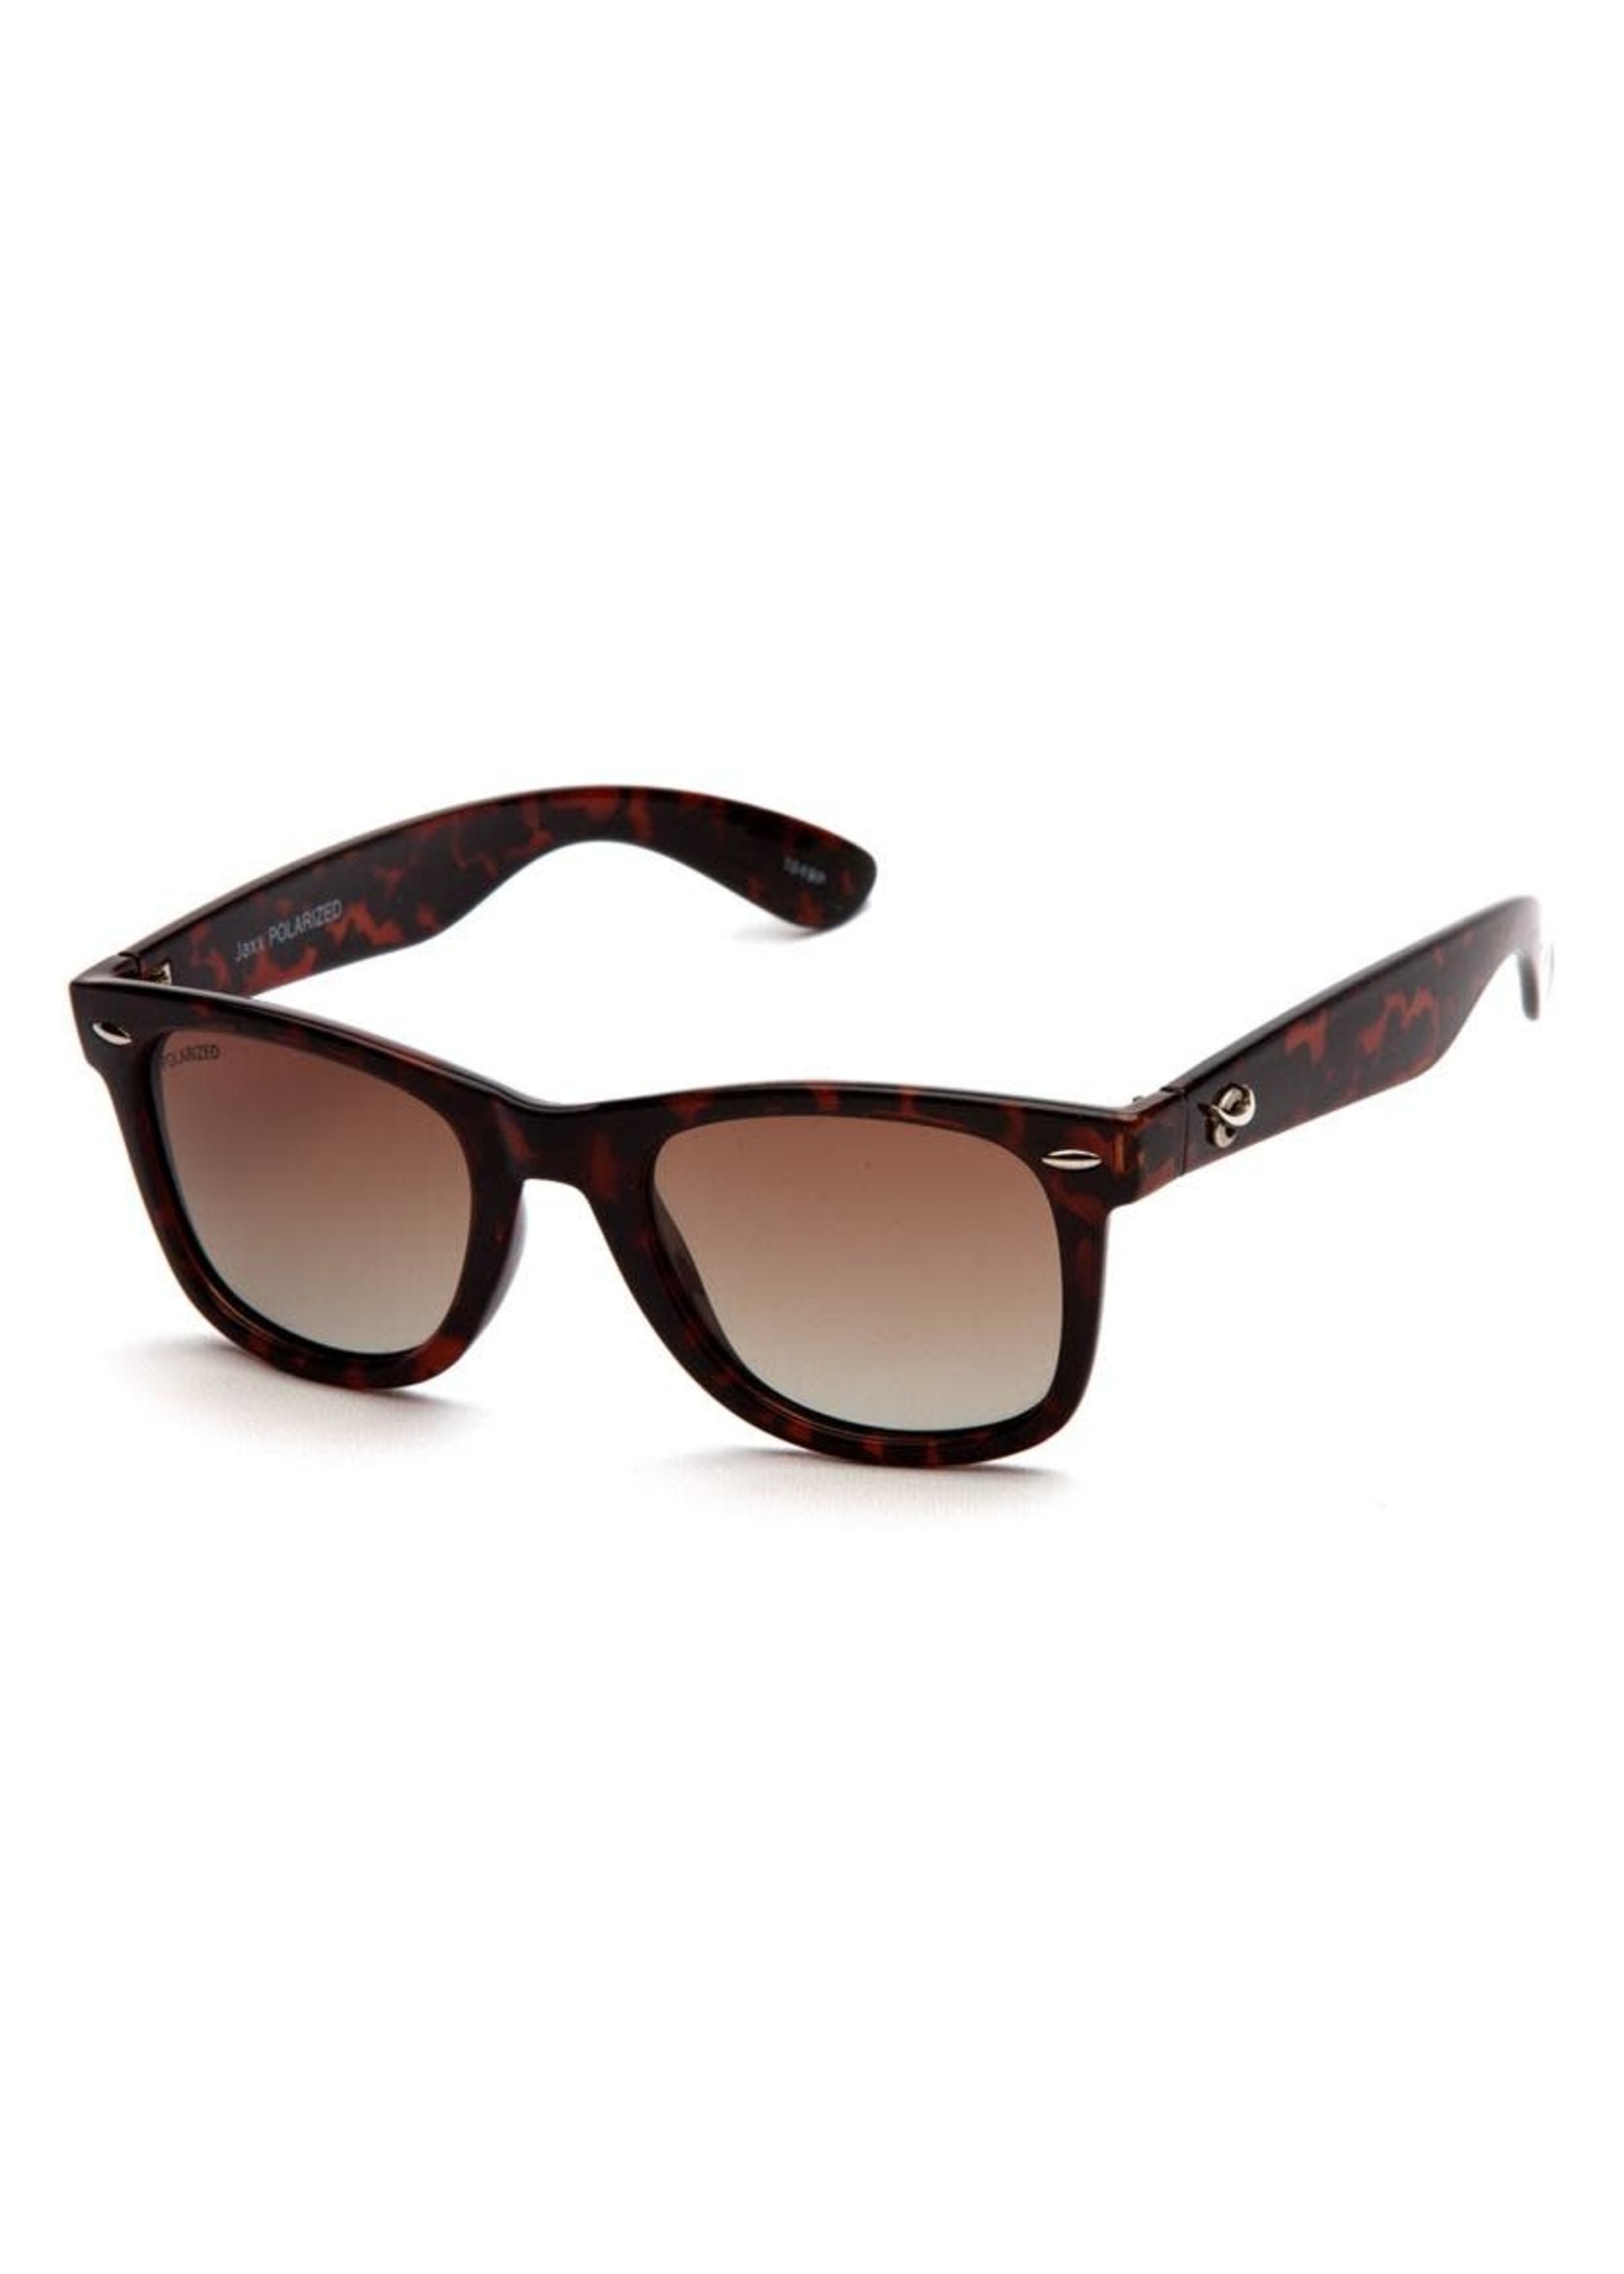 Urban Element Urban Element Premium Sport Sunglasses Women   POLARIZED's Jaxx